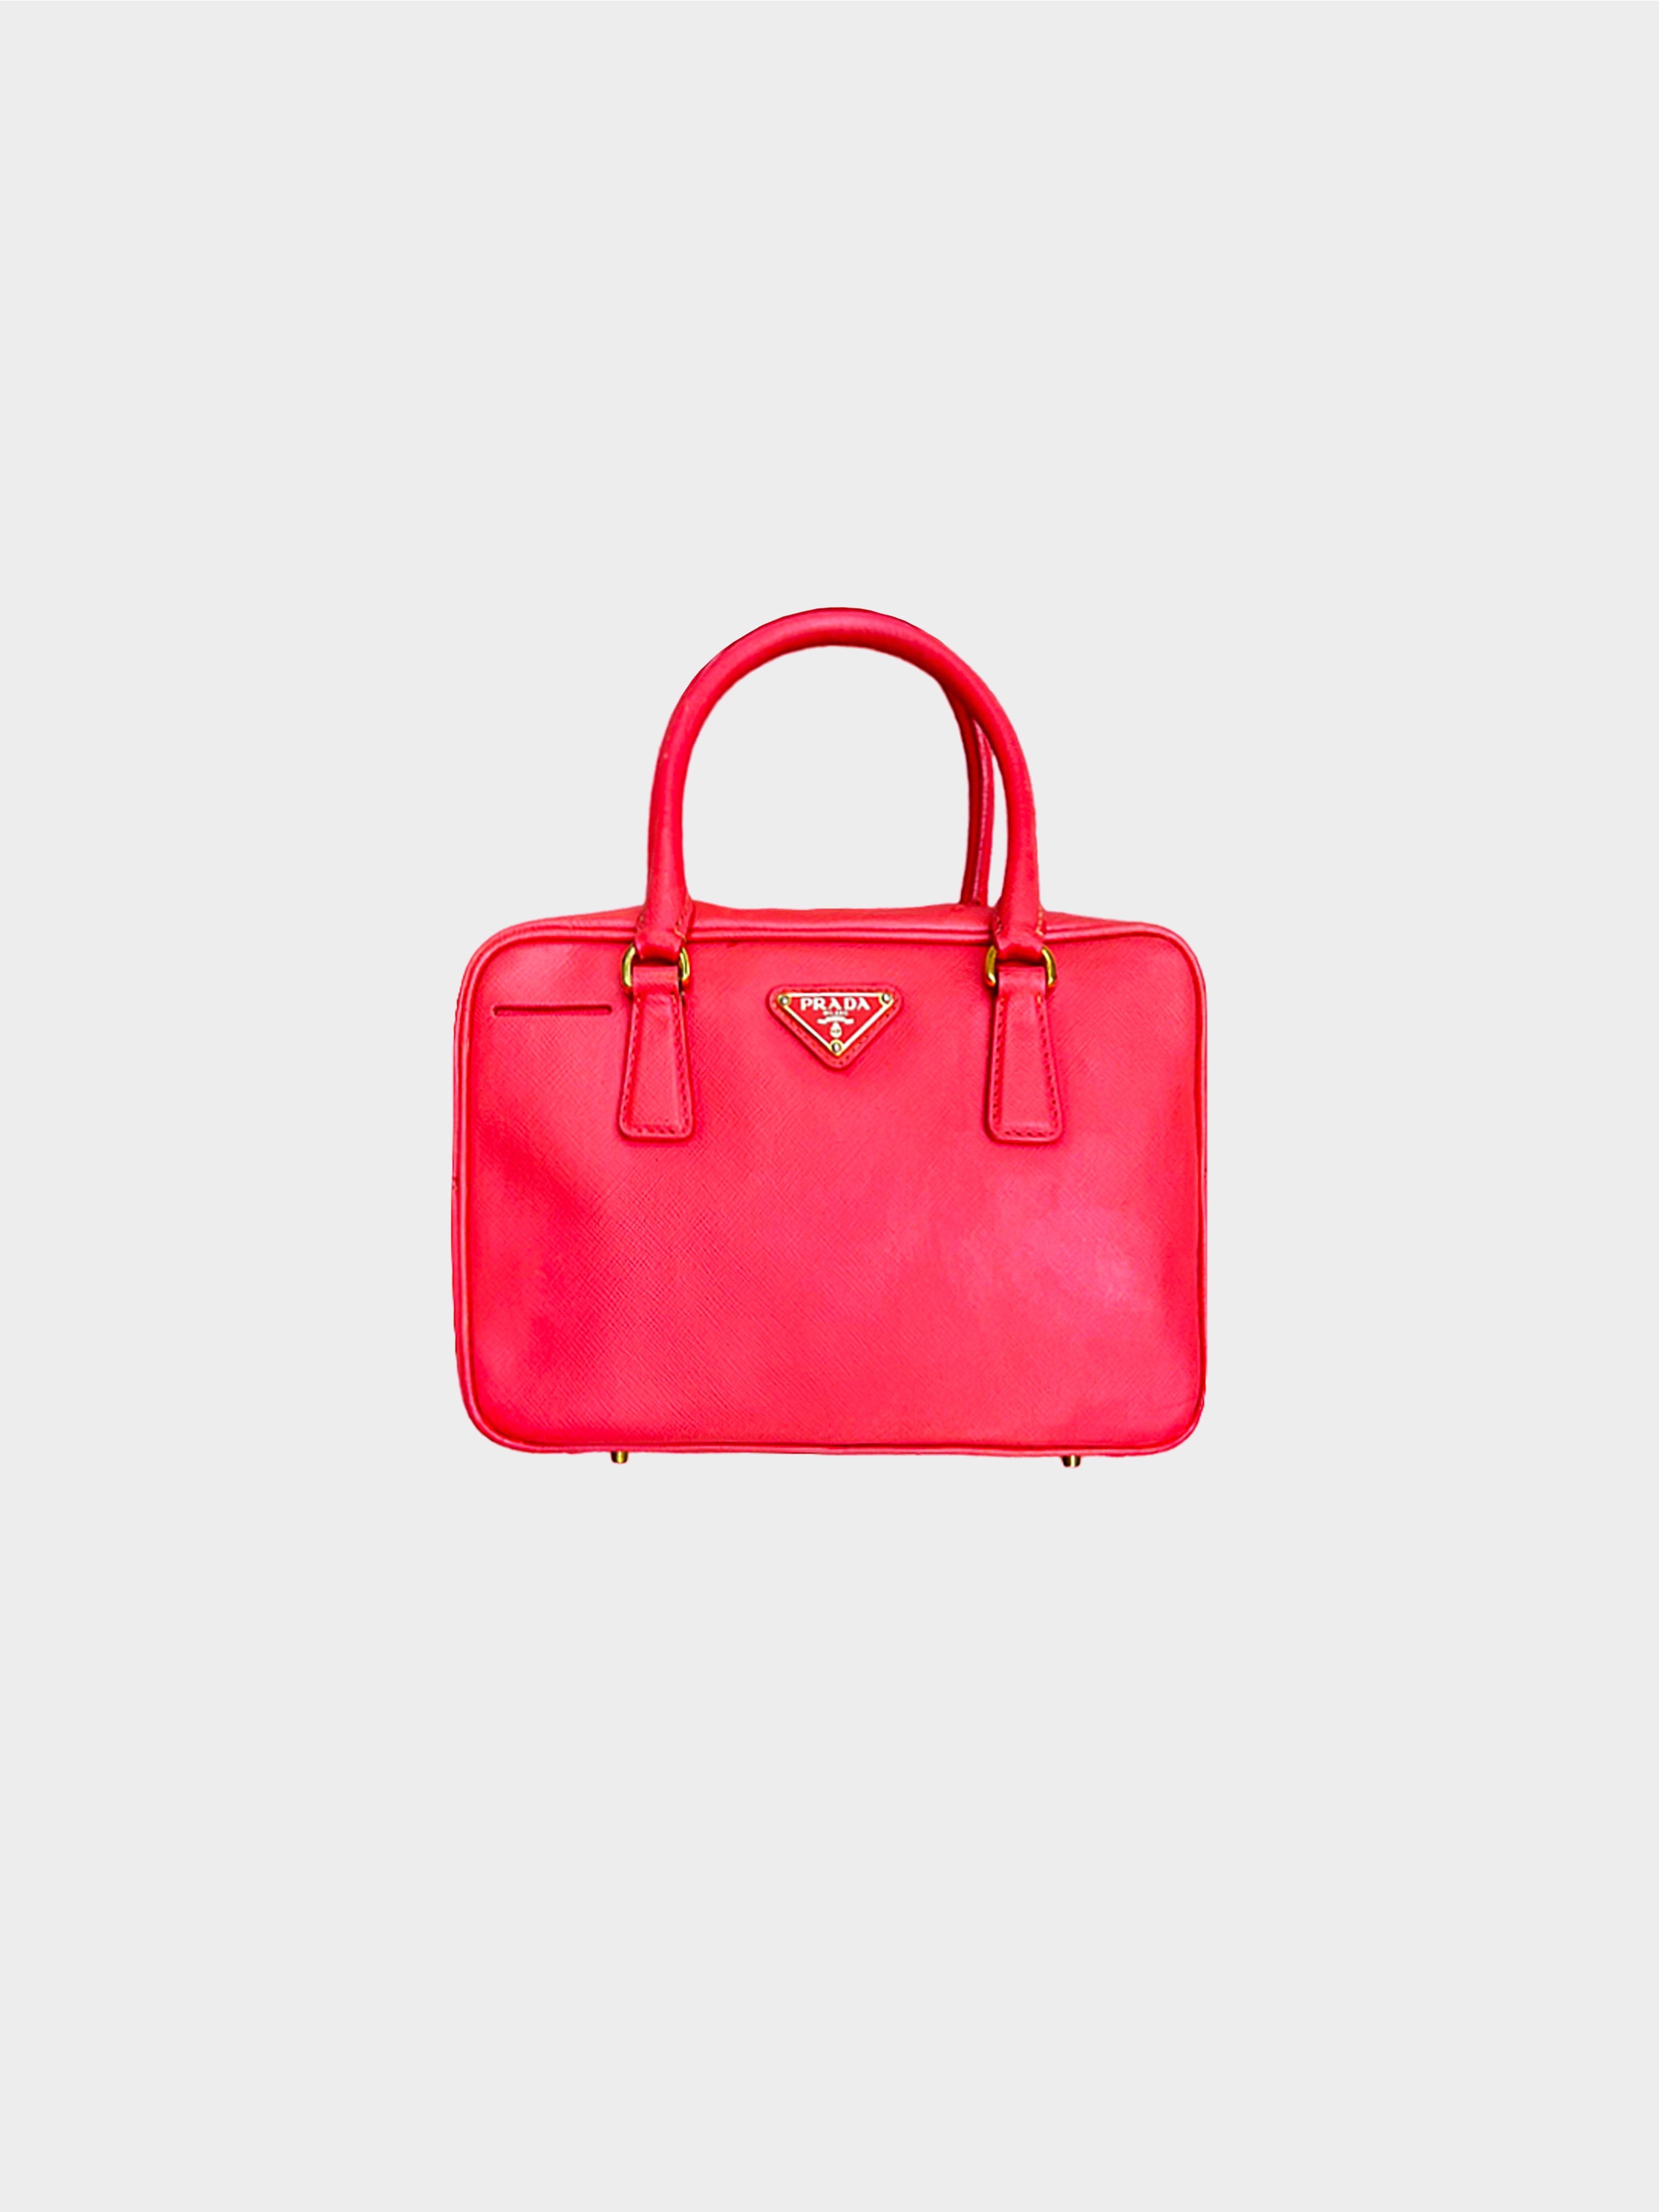 Prada 2010s Pink Saffiano Leather Bauletto Bag